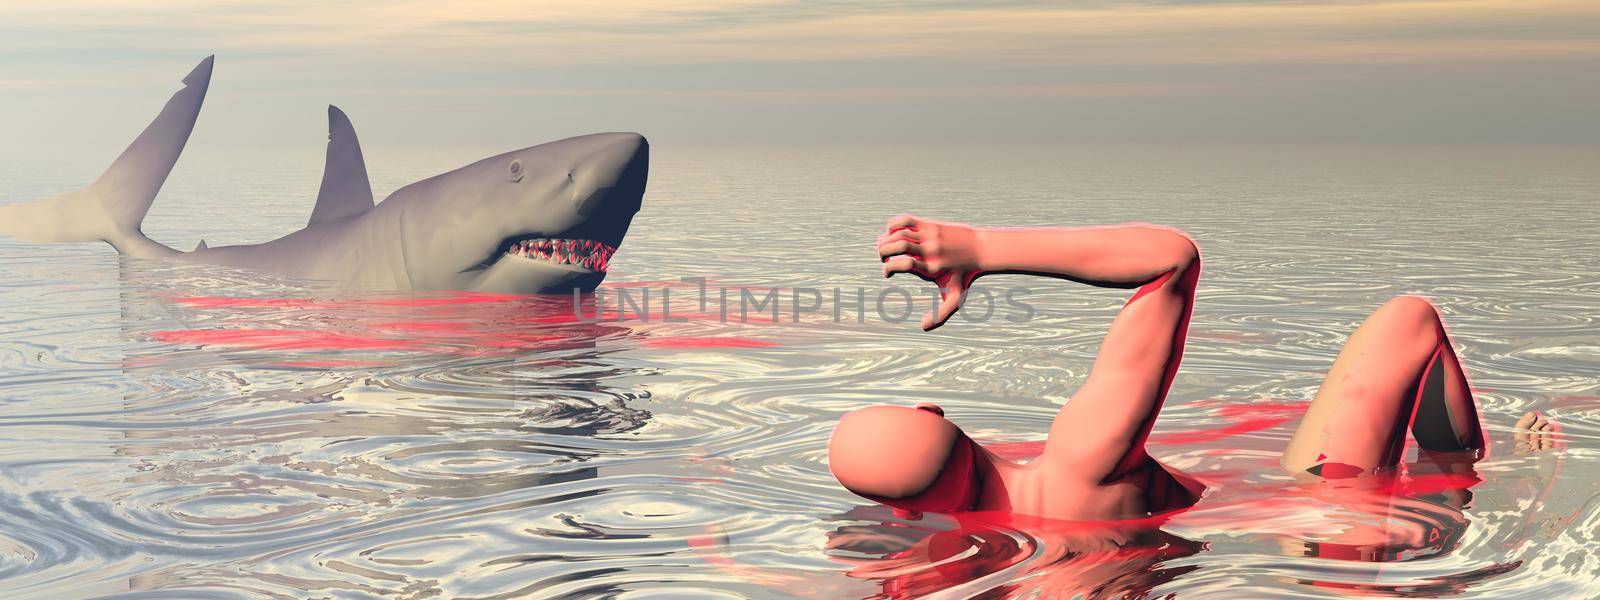 Shark attack - 3D render by Elenaphotos21